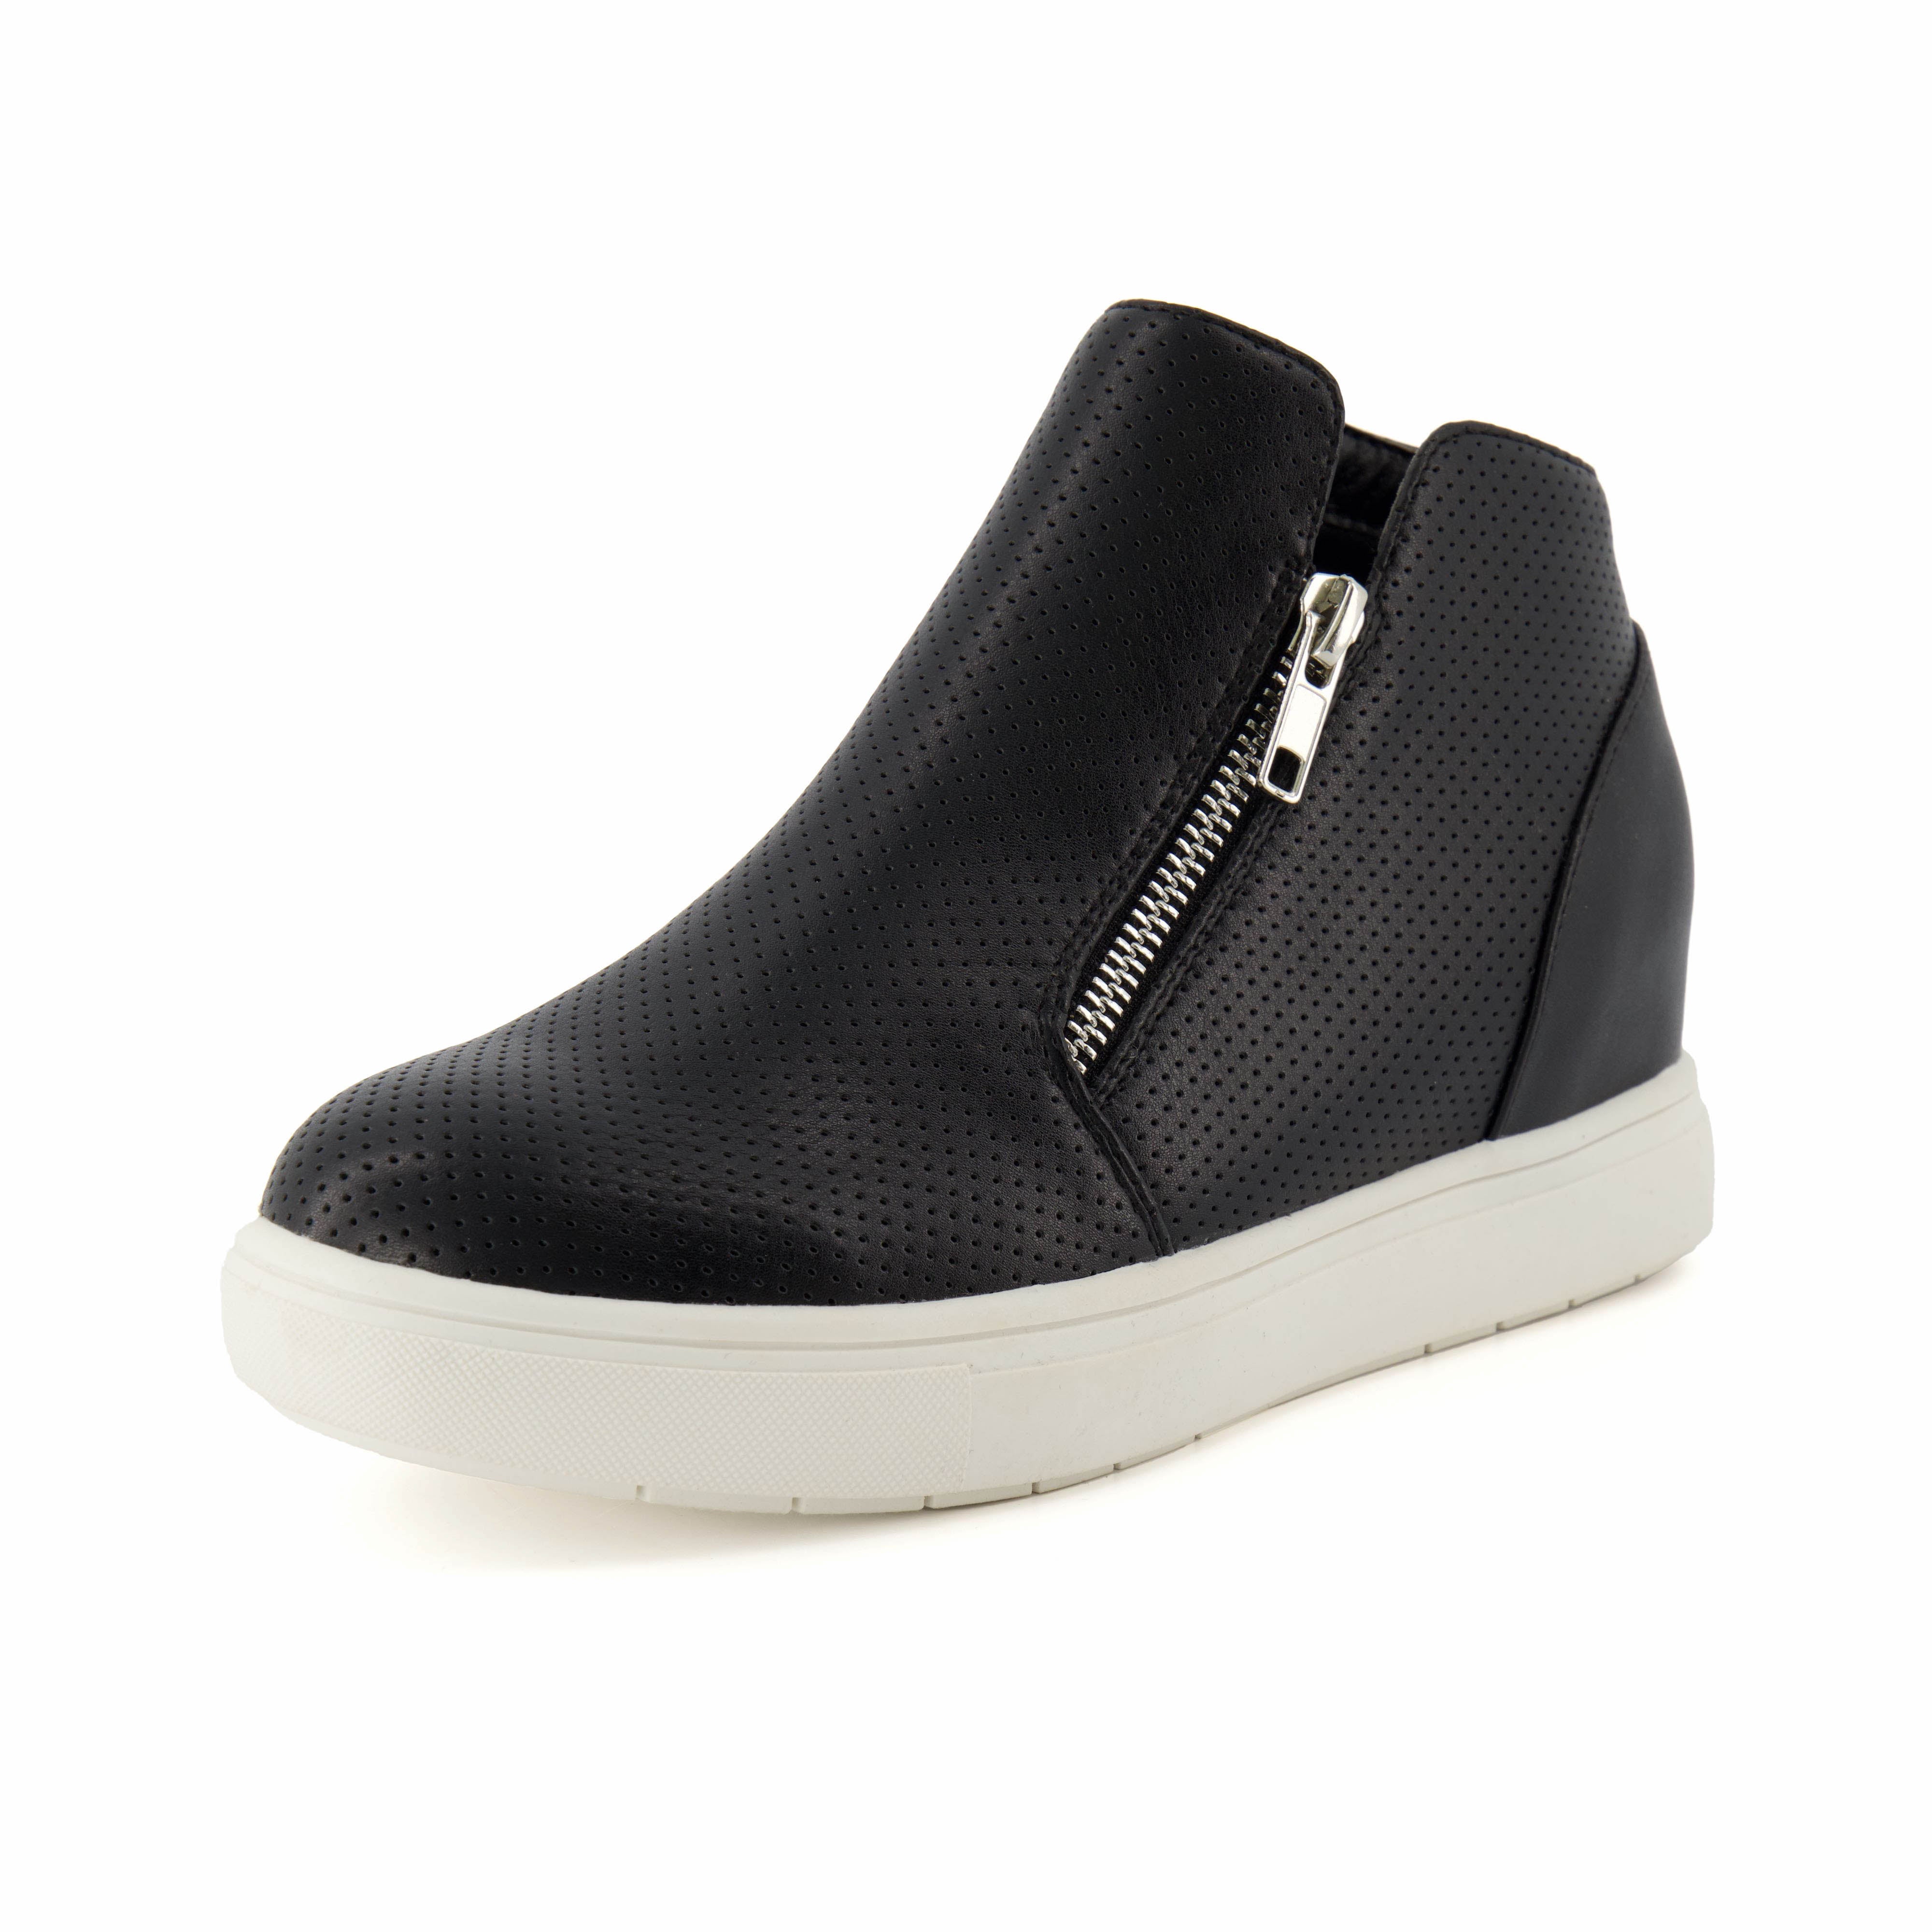 Amazon.com | Women's Formal Wedge Hidden Heel Suede Leather Fashion Sneaker  (Black, 4.5) | Fashion Sneakers